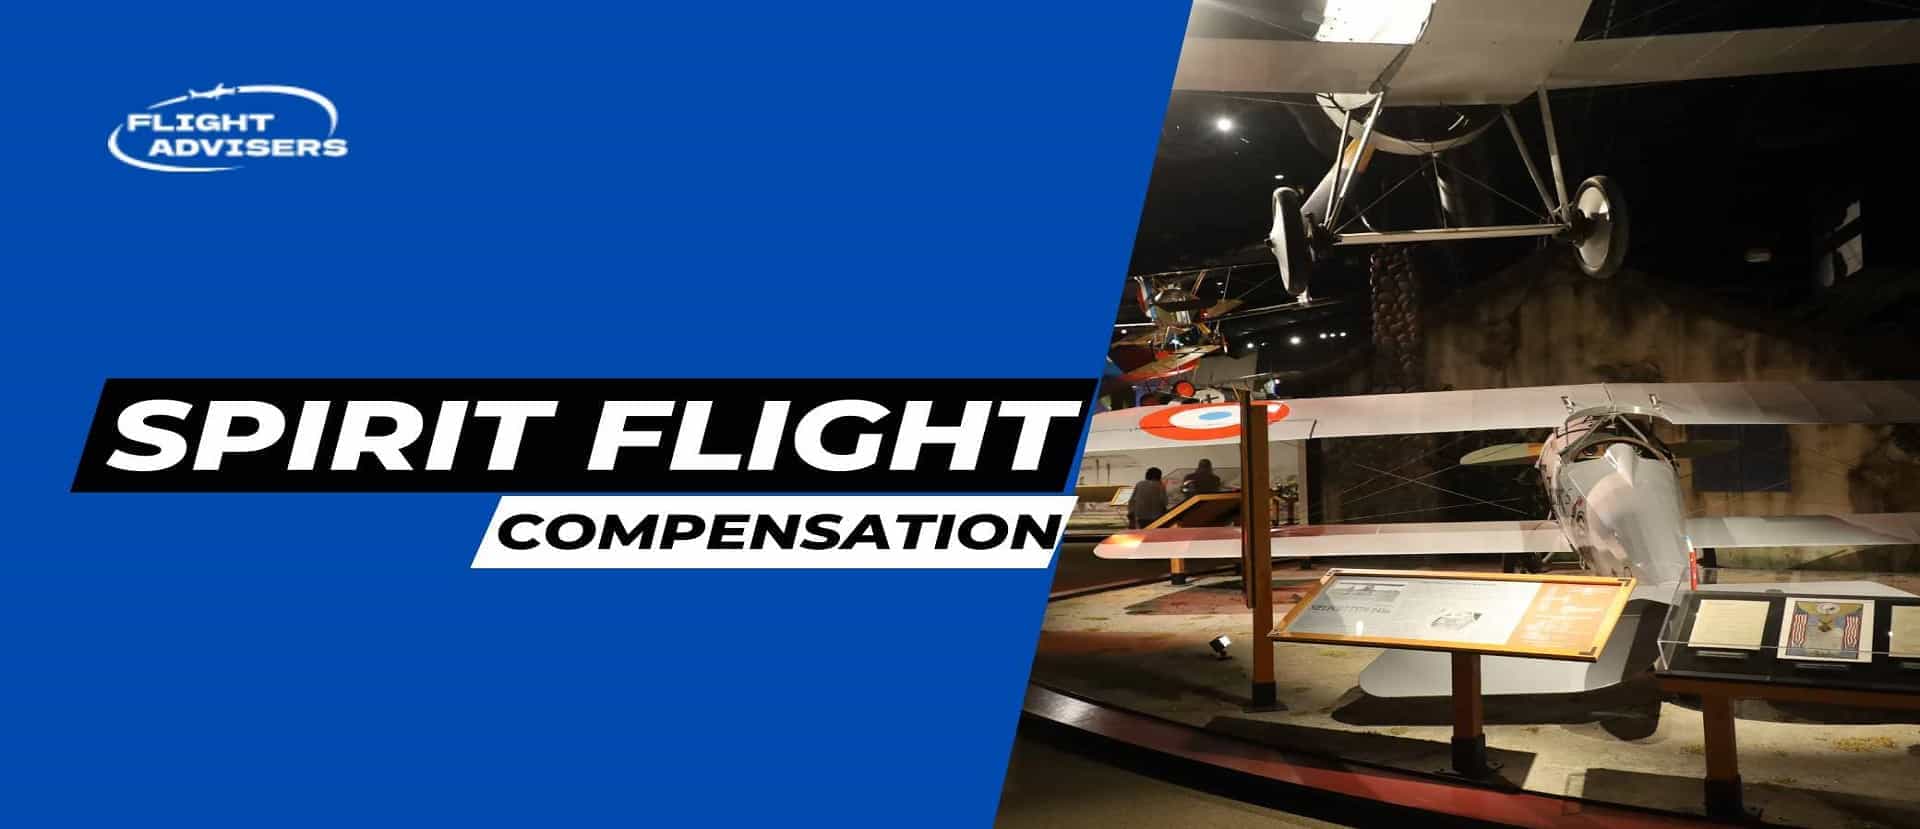 spirit-flight-compensation